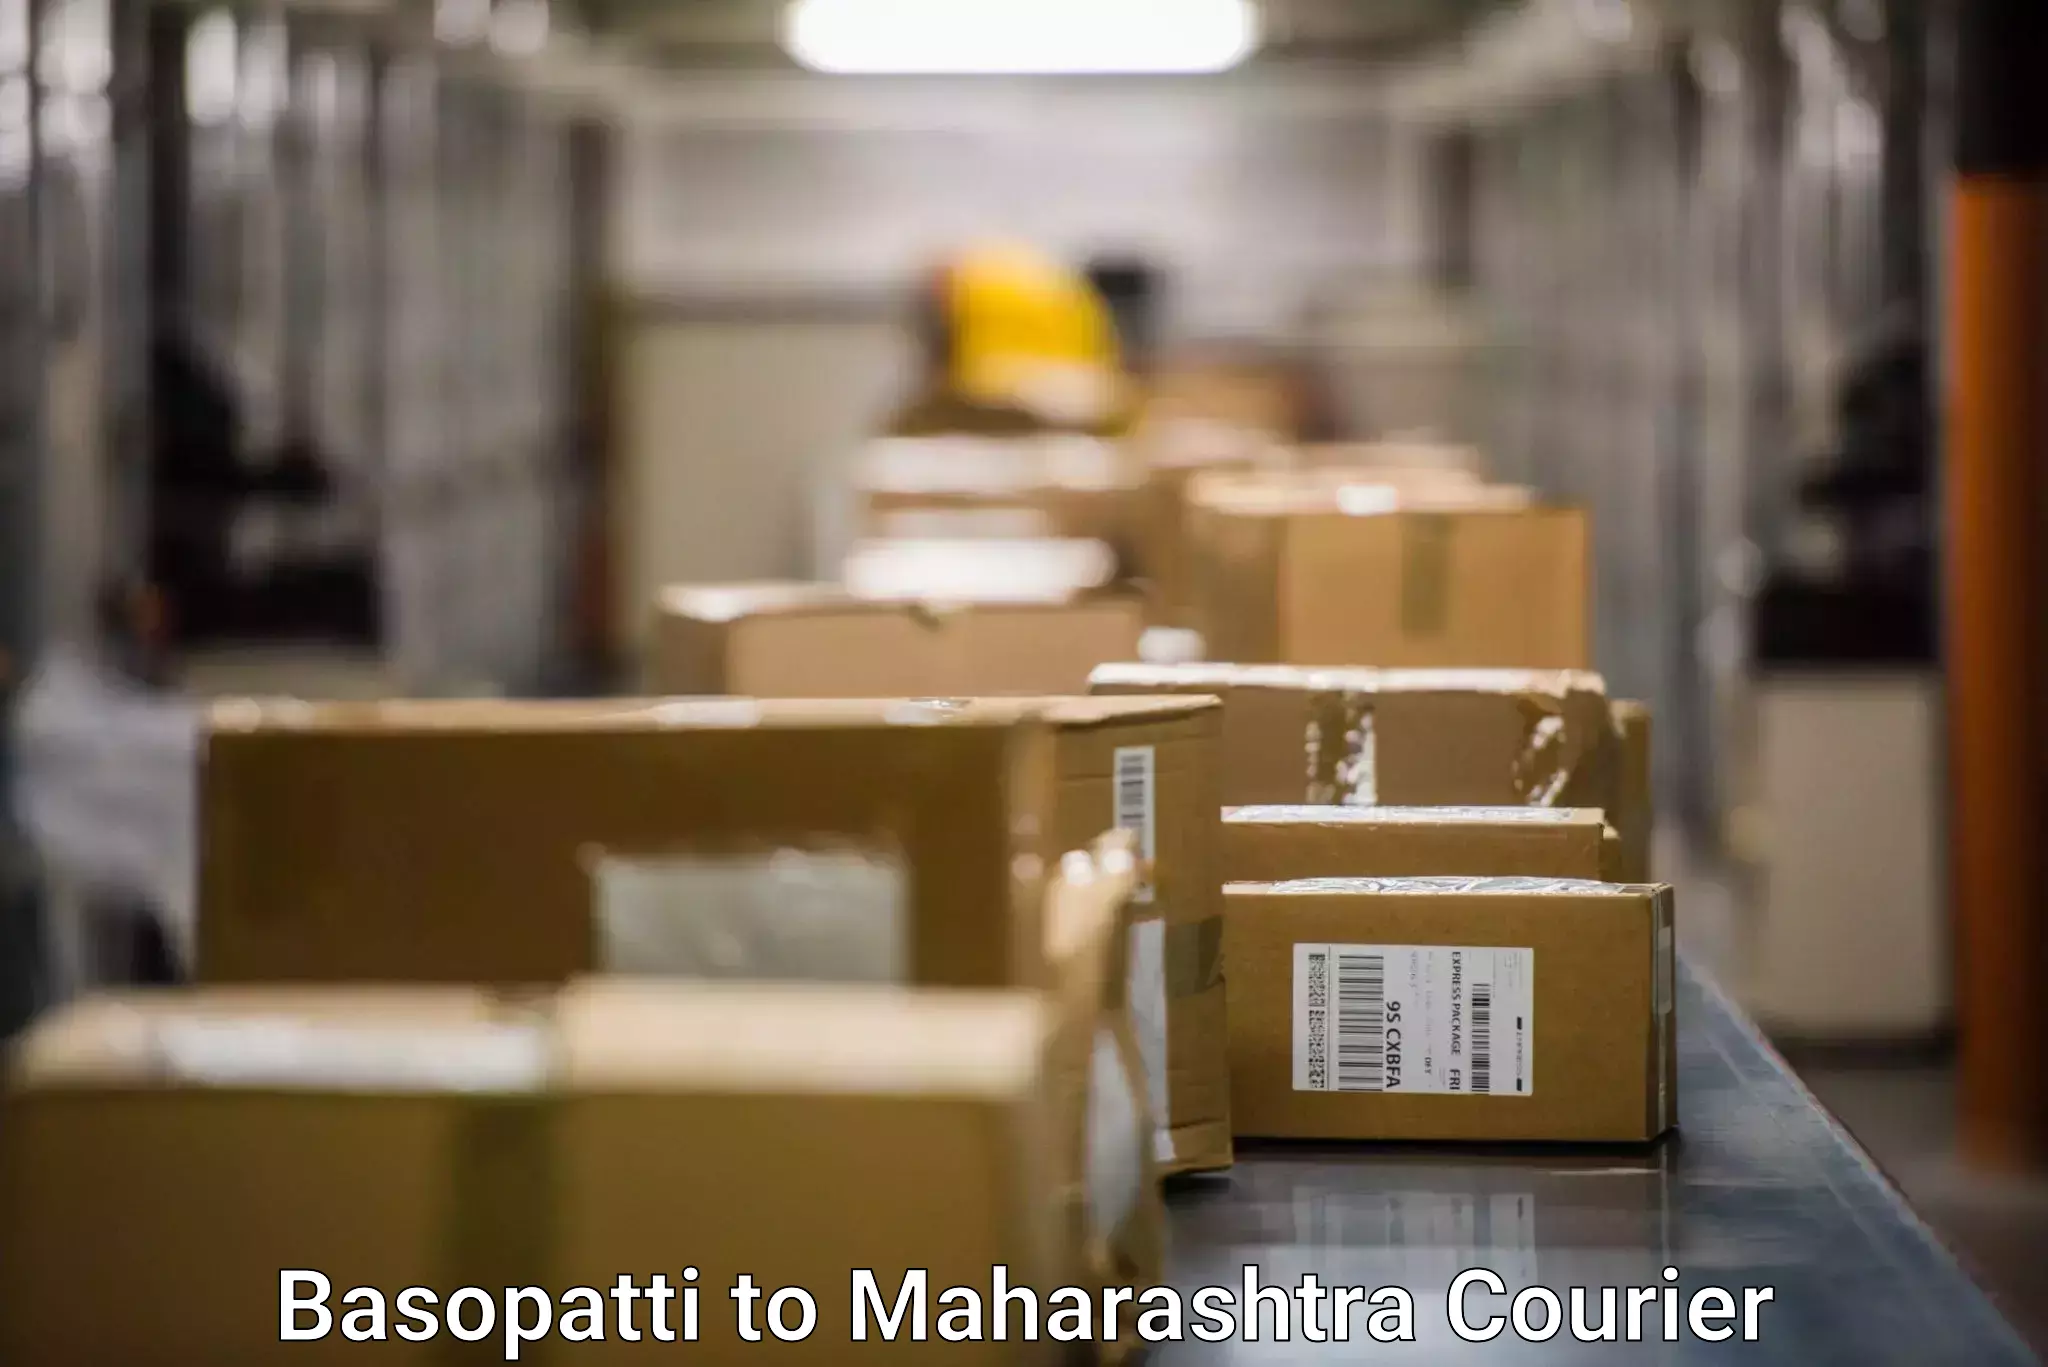 Courier service partnerships Basopatti to IIIT Pune